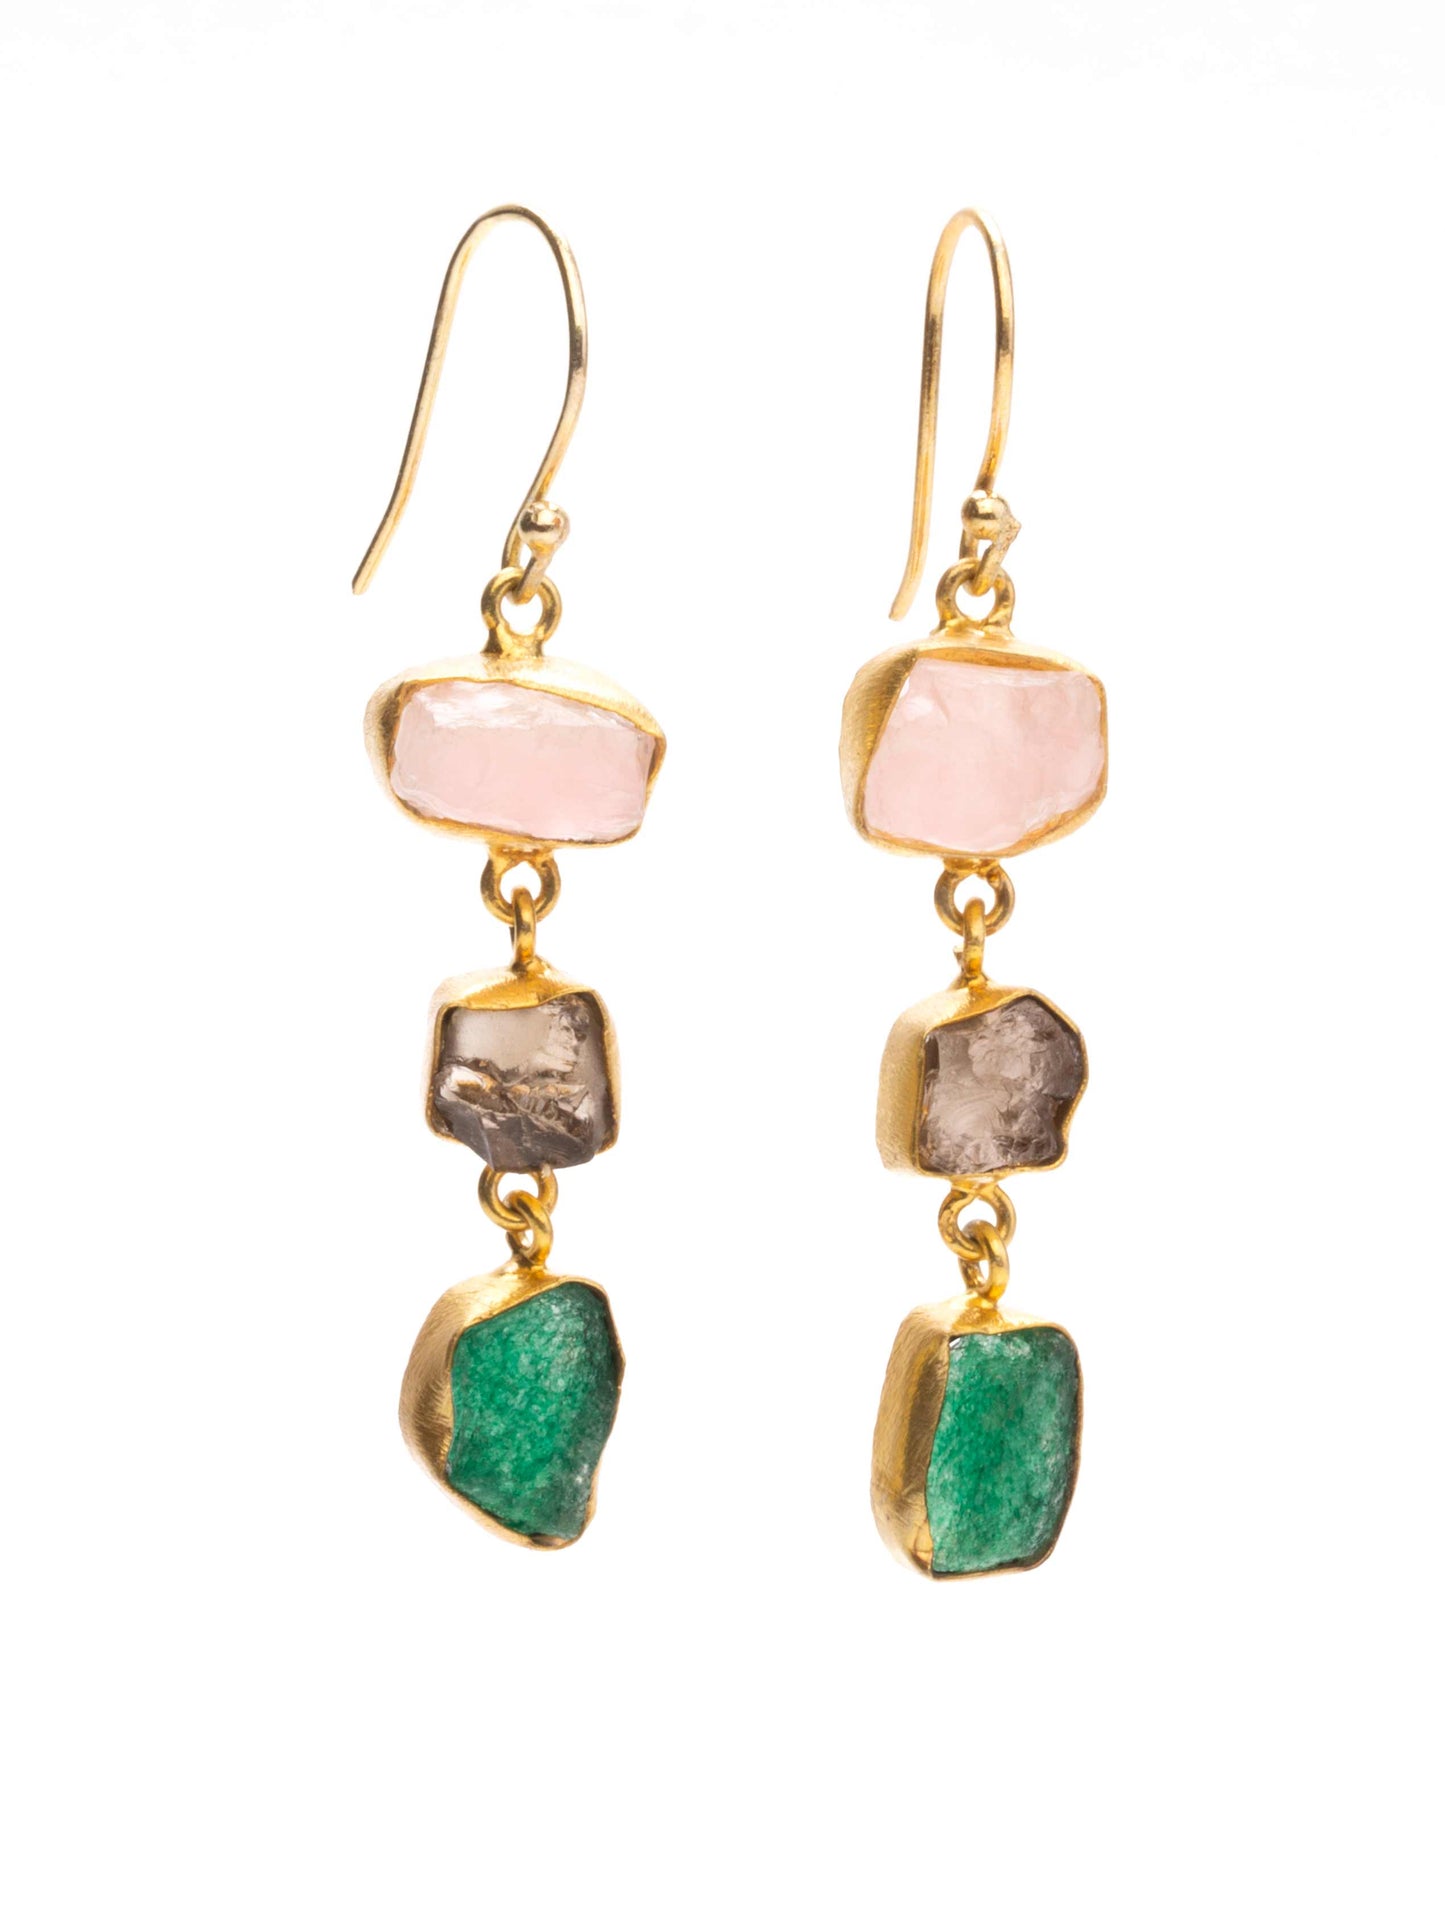 Gold Luxe earrings - triple drop gems rose quartz, smokey quartz & aventurine